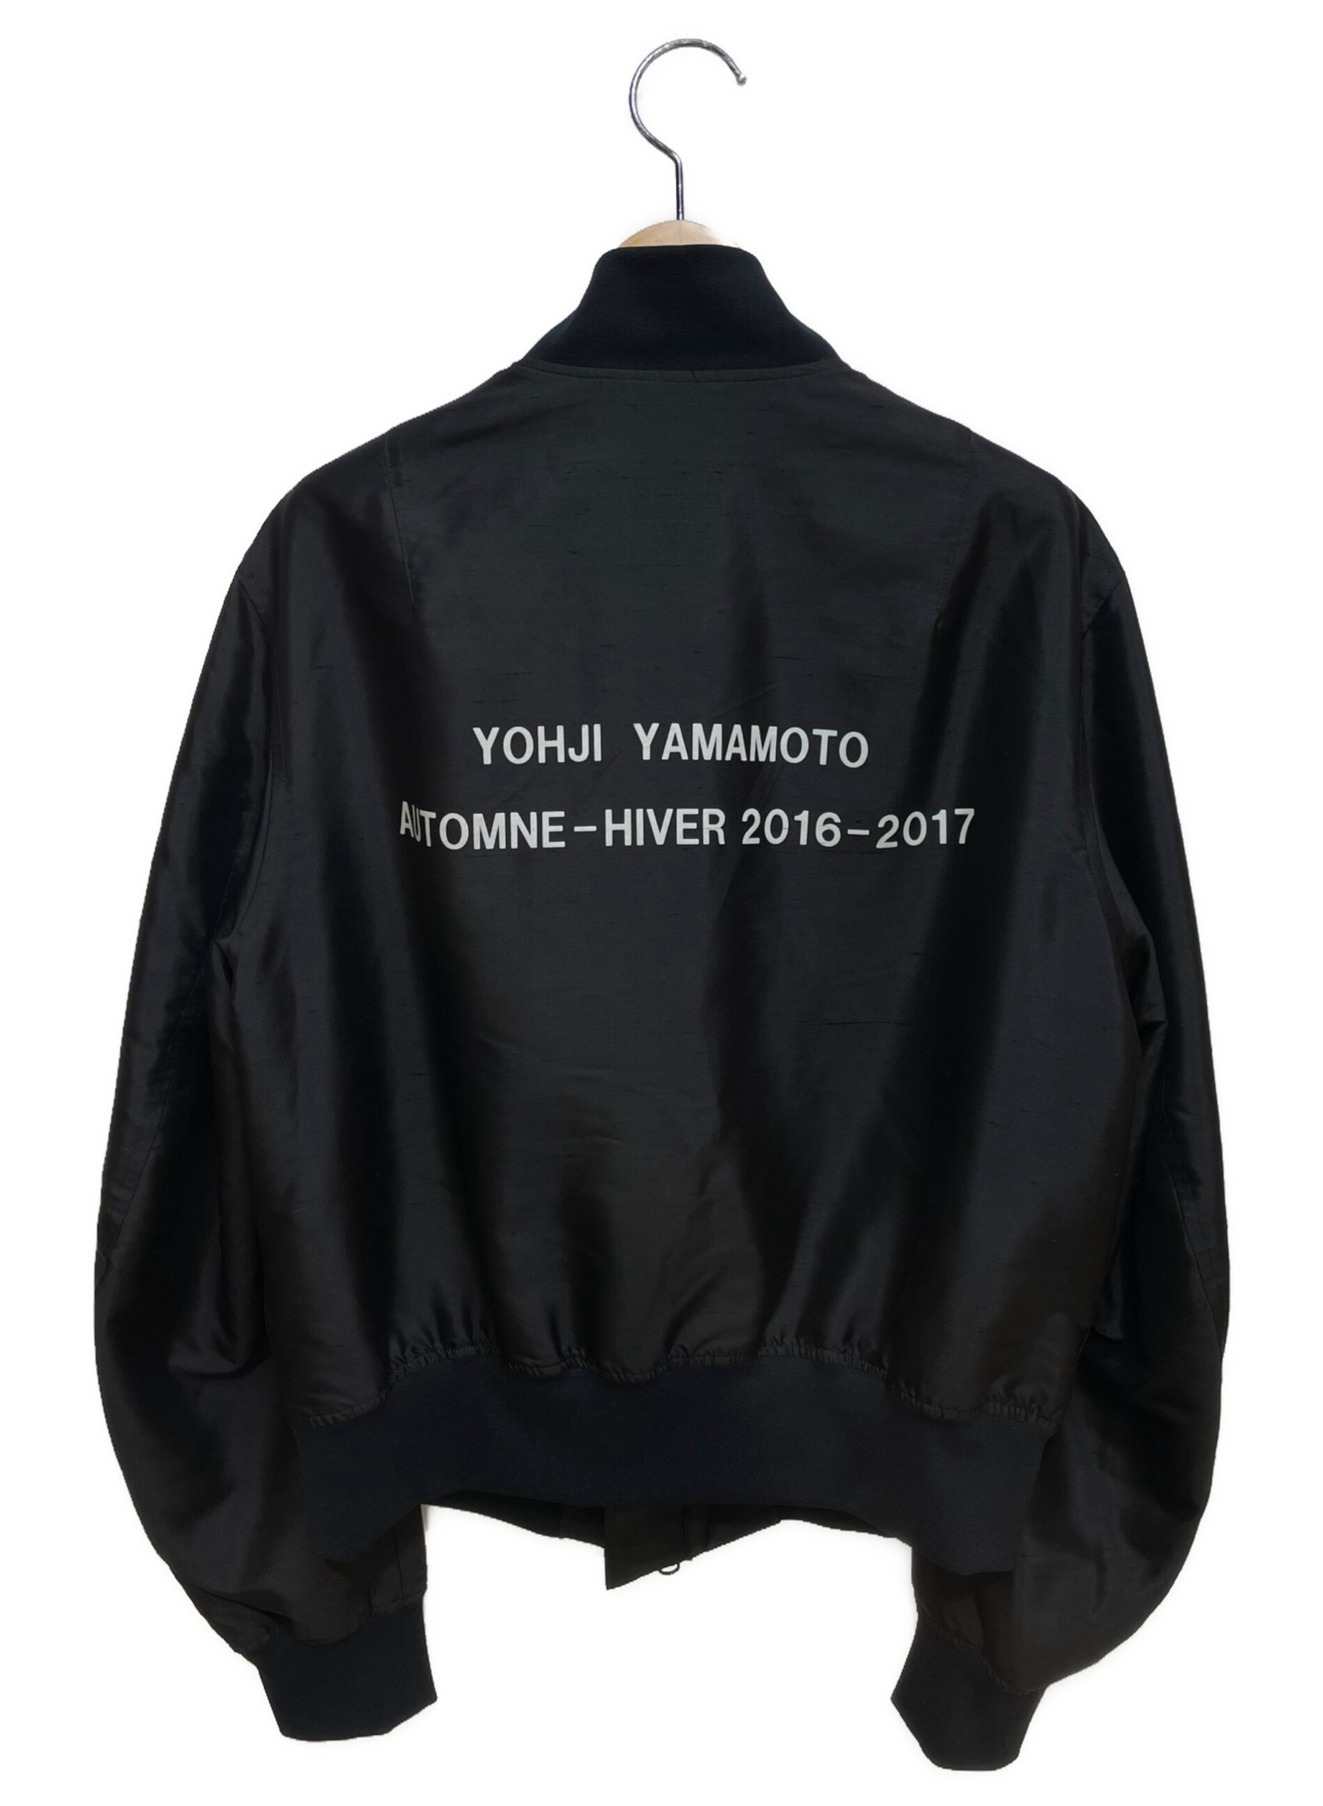 YOHJI YAMAMOTO (ヨウジヤマモト) スタッフシルクブルゾン ブラック サイズ:2